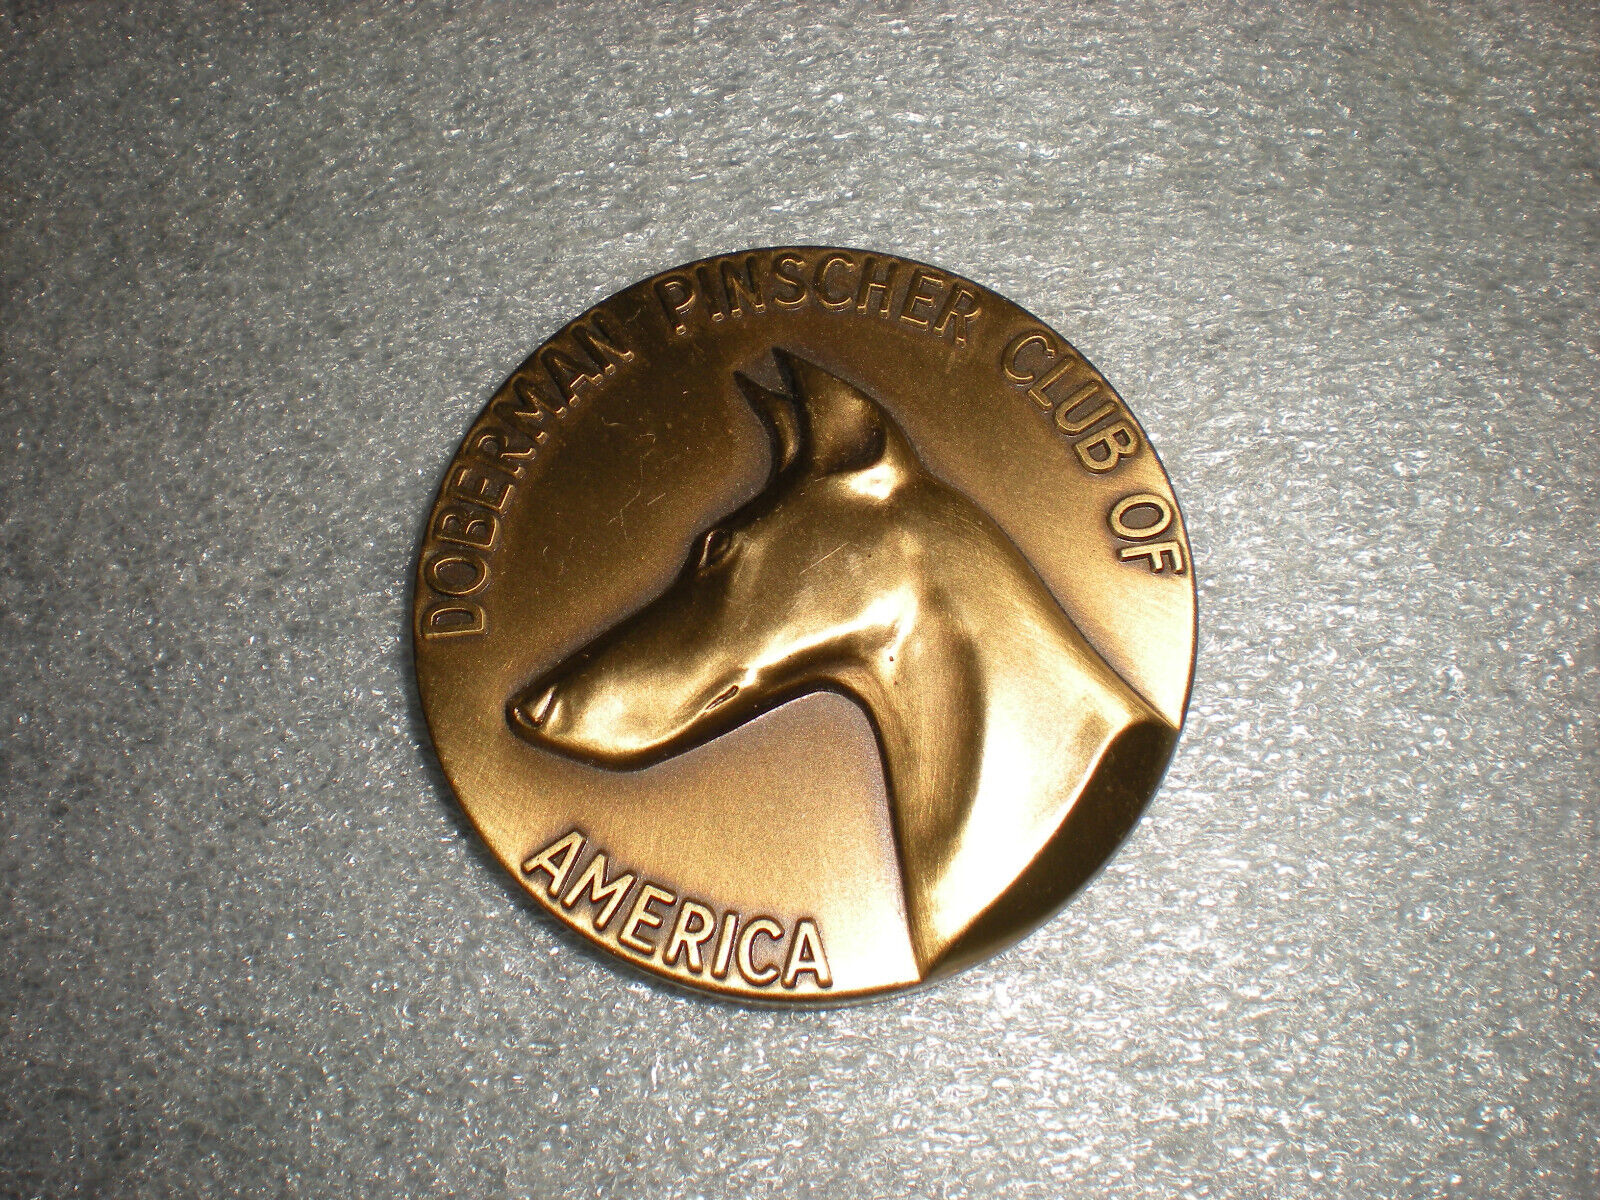 Doberman Pinscher Club of America PSDPC 8/6/88 Dog Show Award Medal Trophy Coin